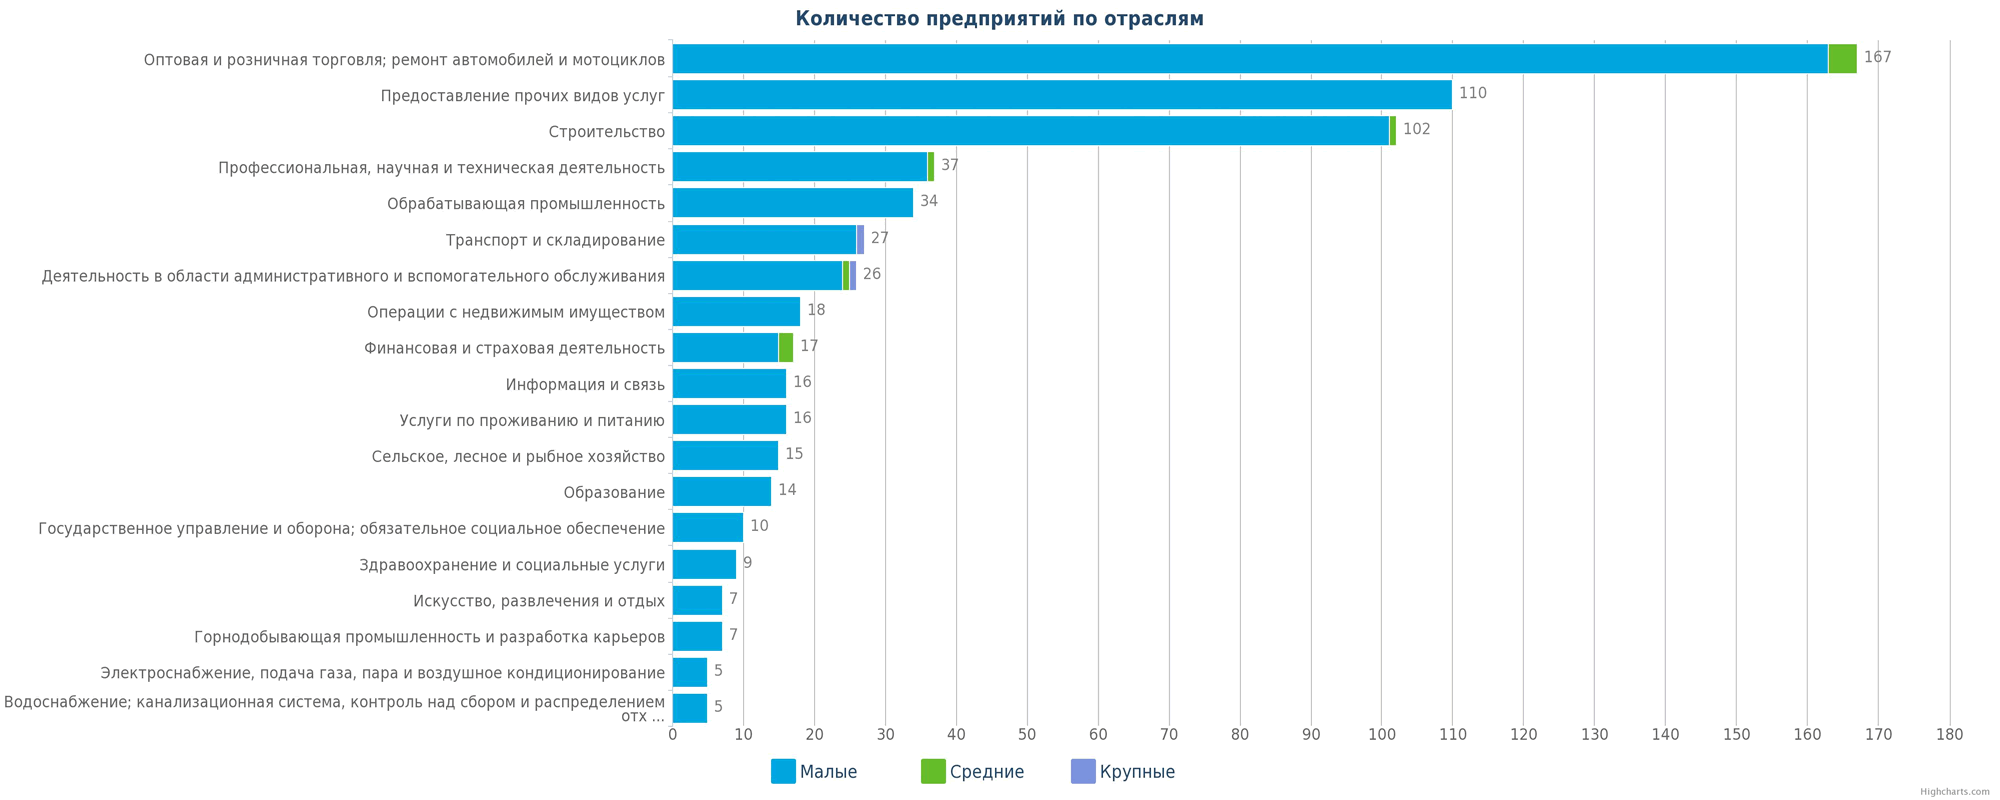 Количество новых предприятий в Казахстане по отраслям